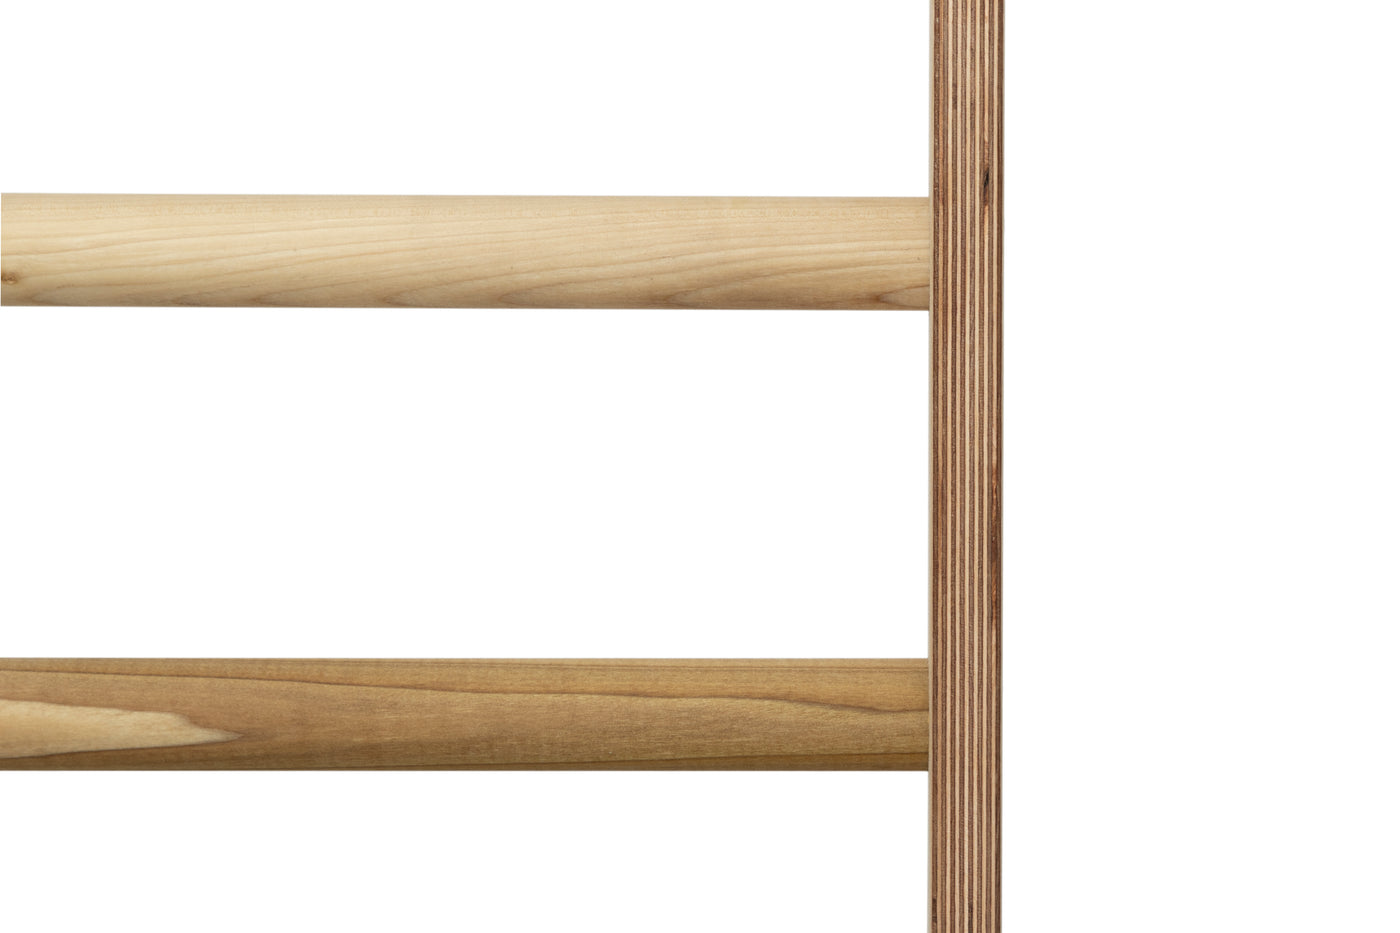 Stall Bar Construction: Furniture grade Baltic Birch laminated wood and hardwood dowel